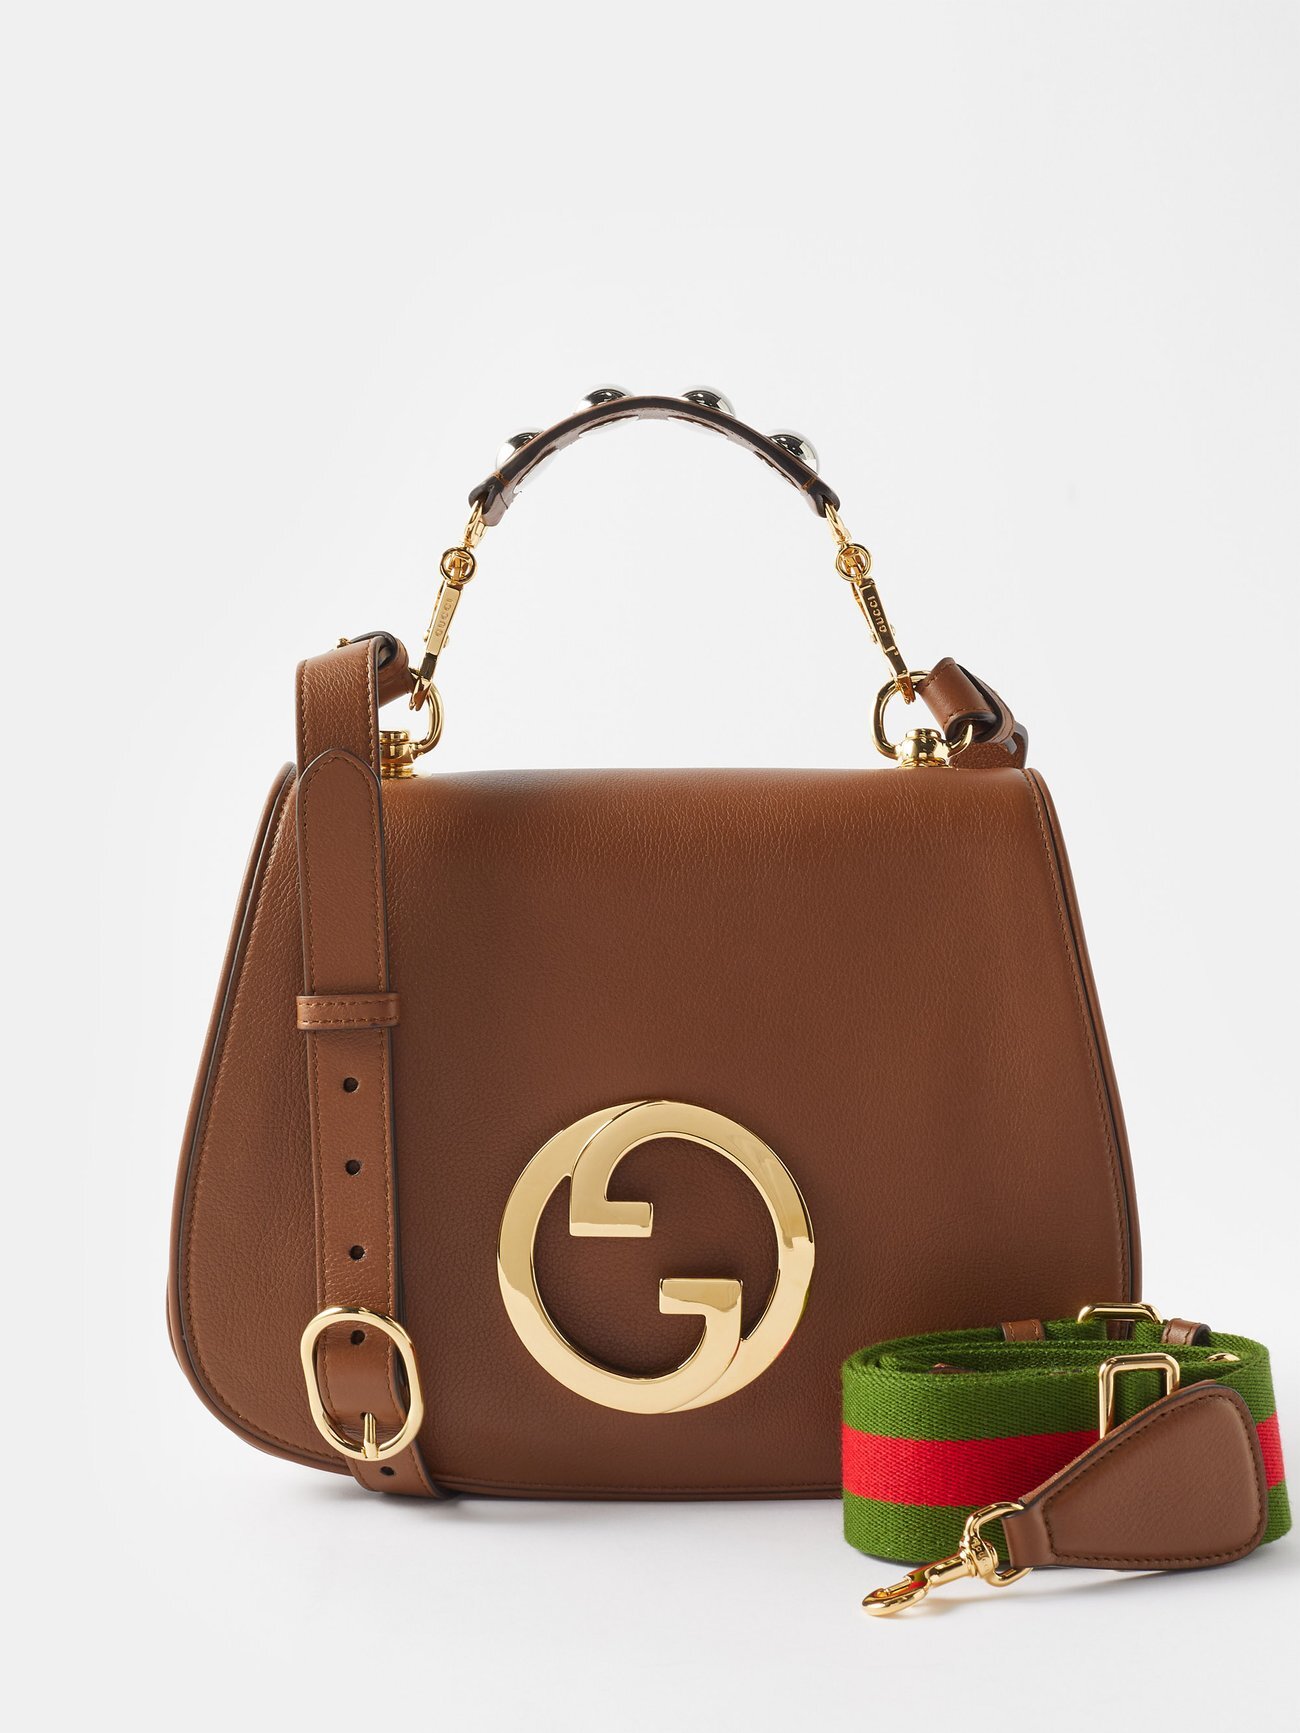 Gucci - Blondie Leather Shoulder Bag - Womens - Tan